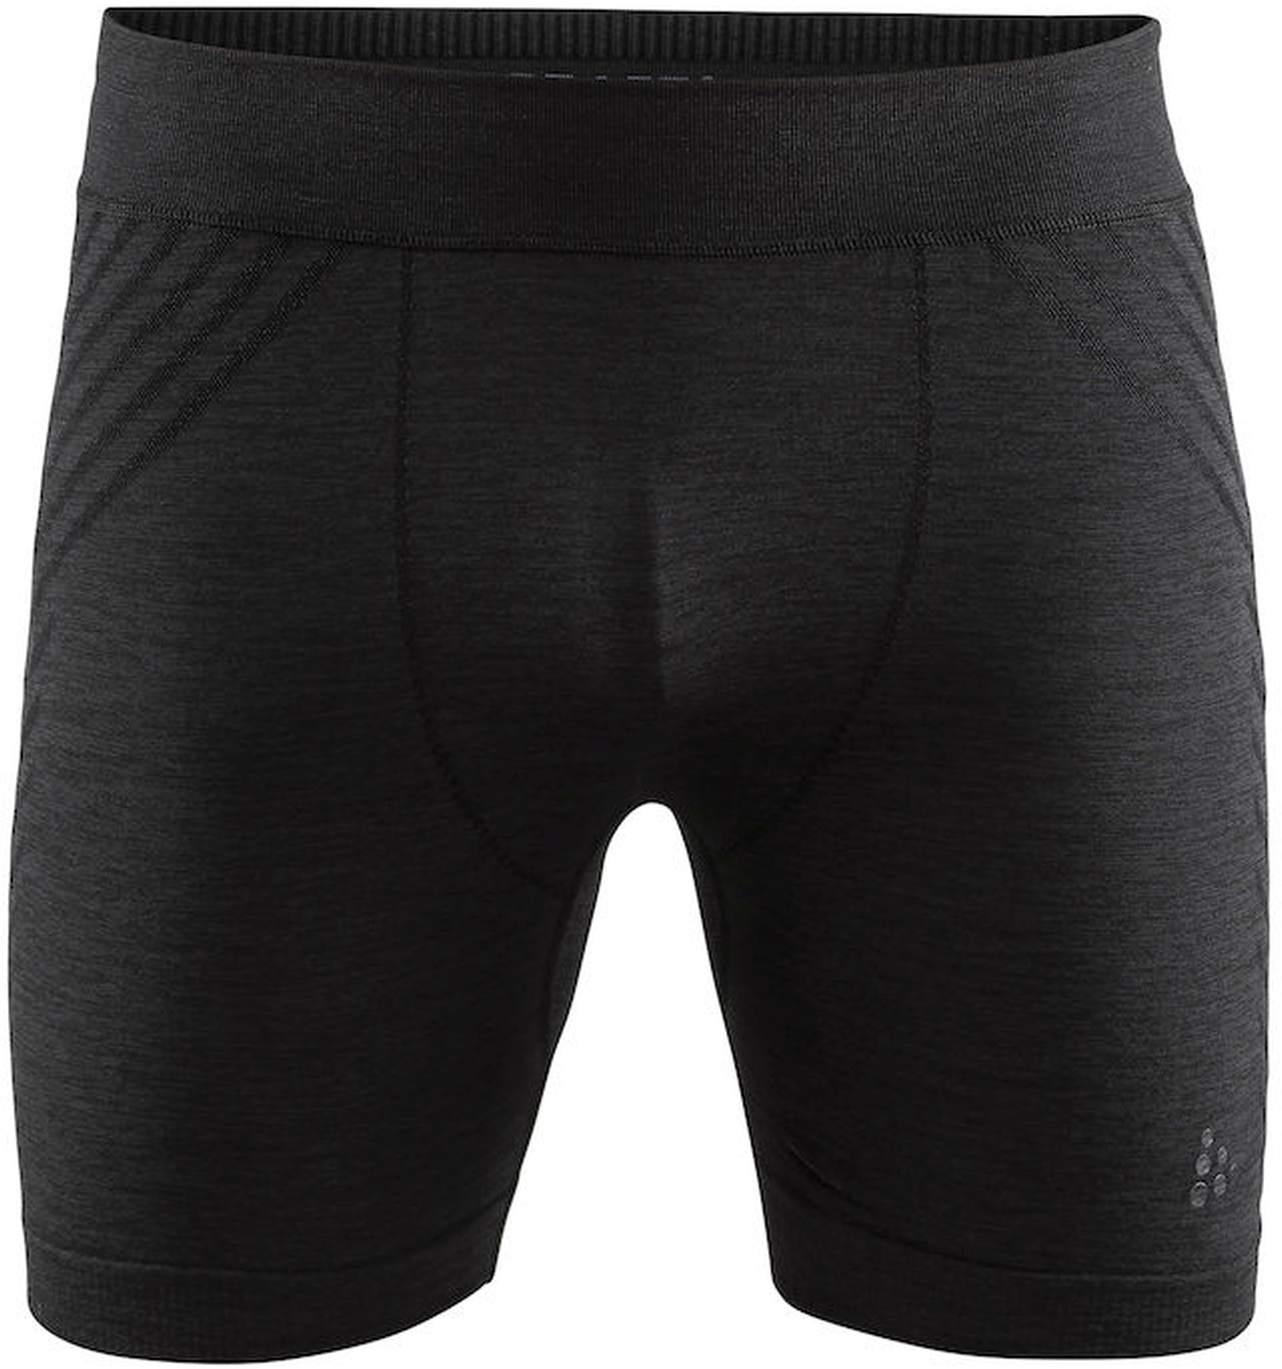 Men's functional boxer shorts